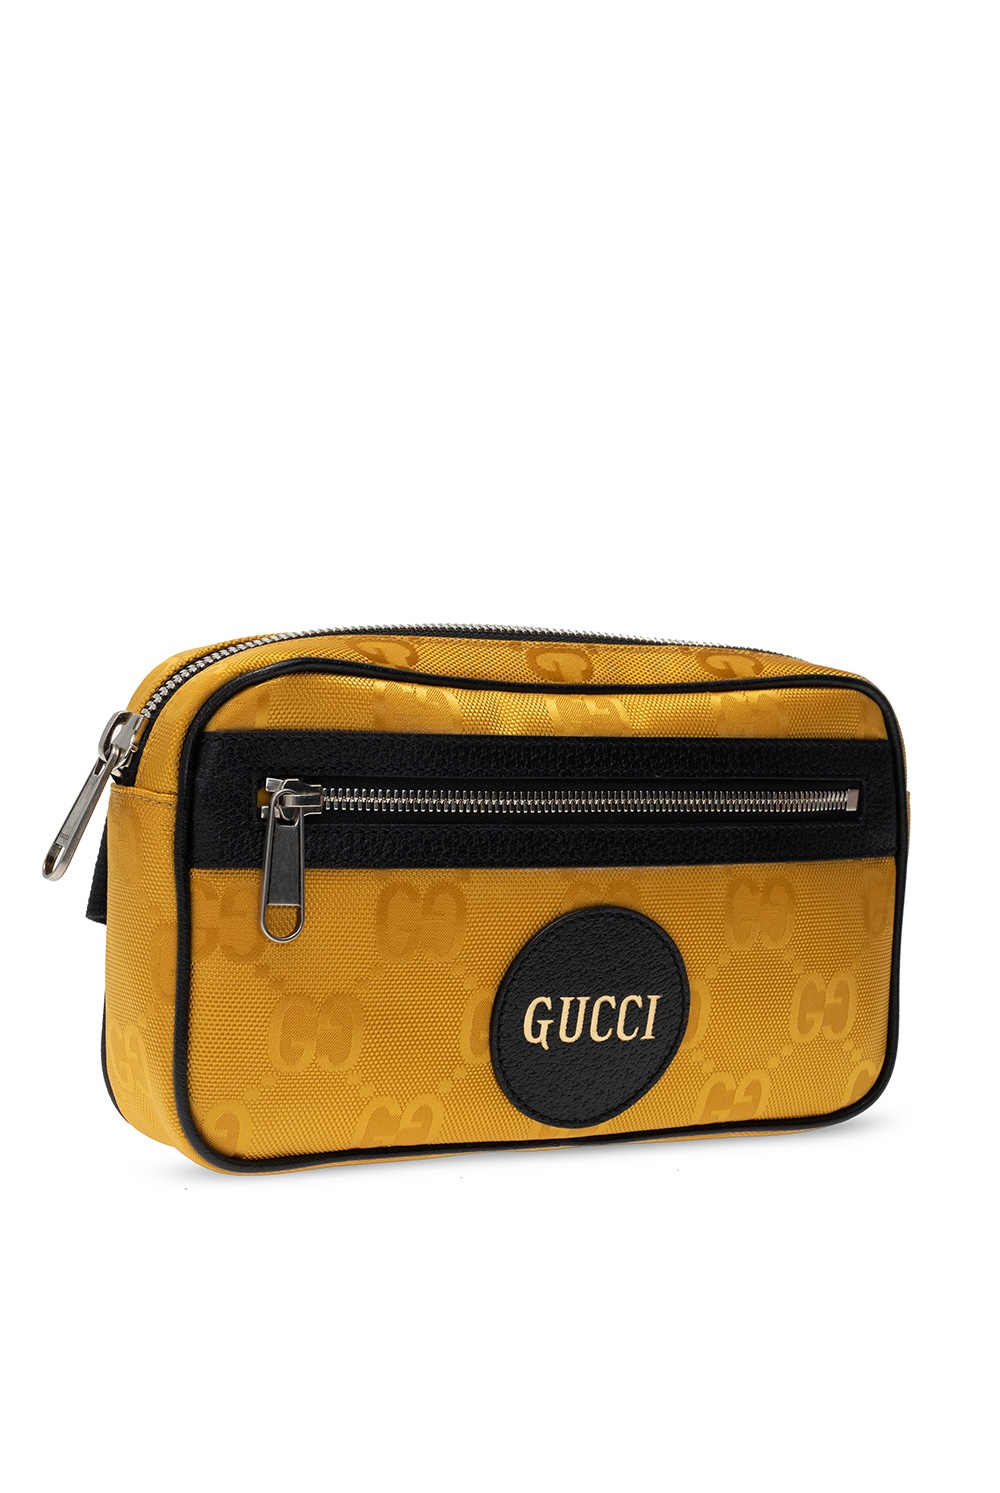 gucci belt bag black and yellow